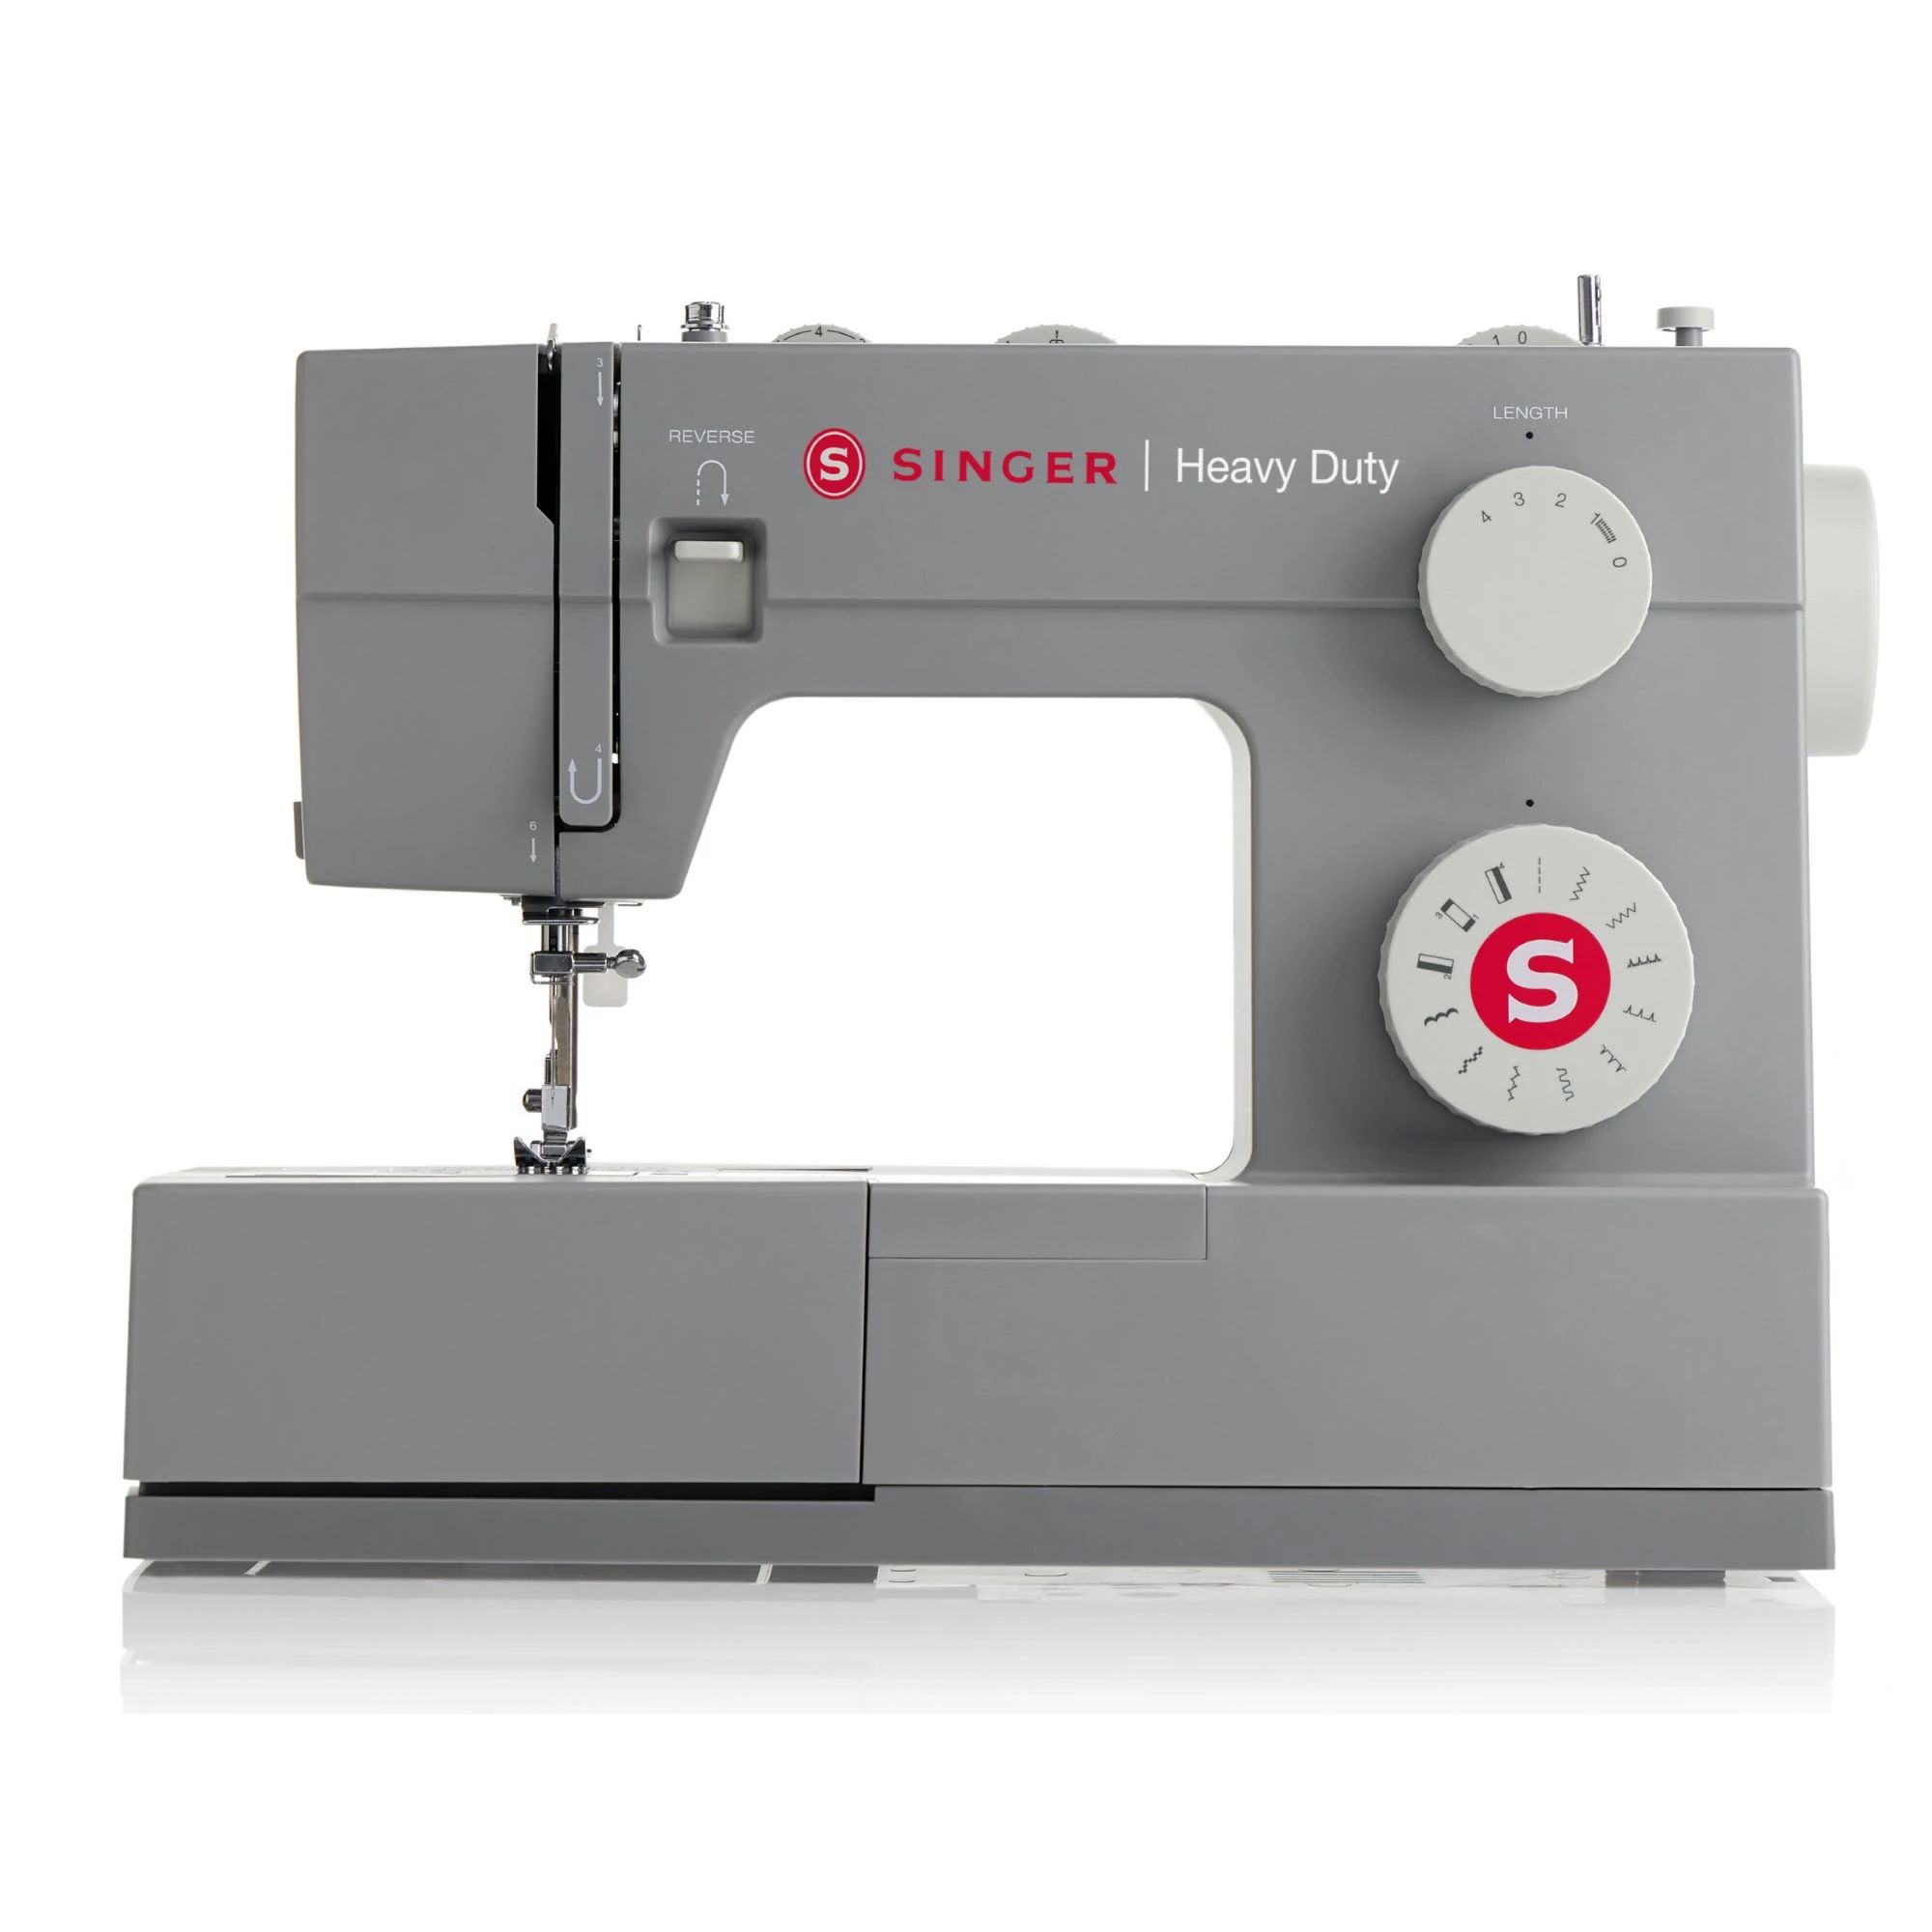 4411 heavy duty singer sewing machine